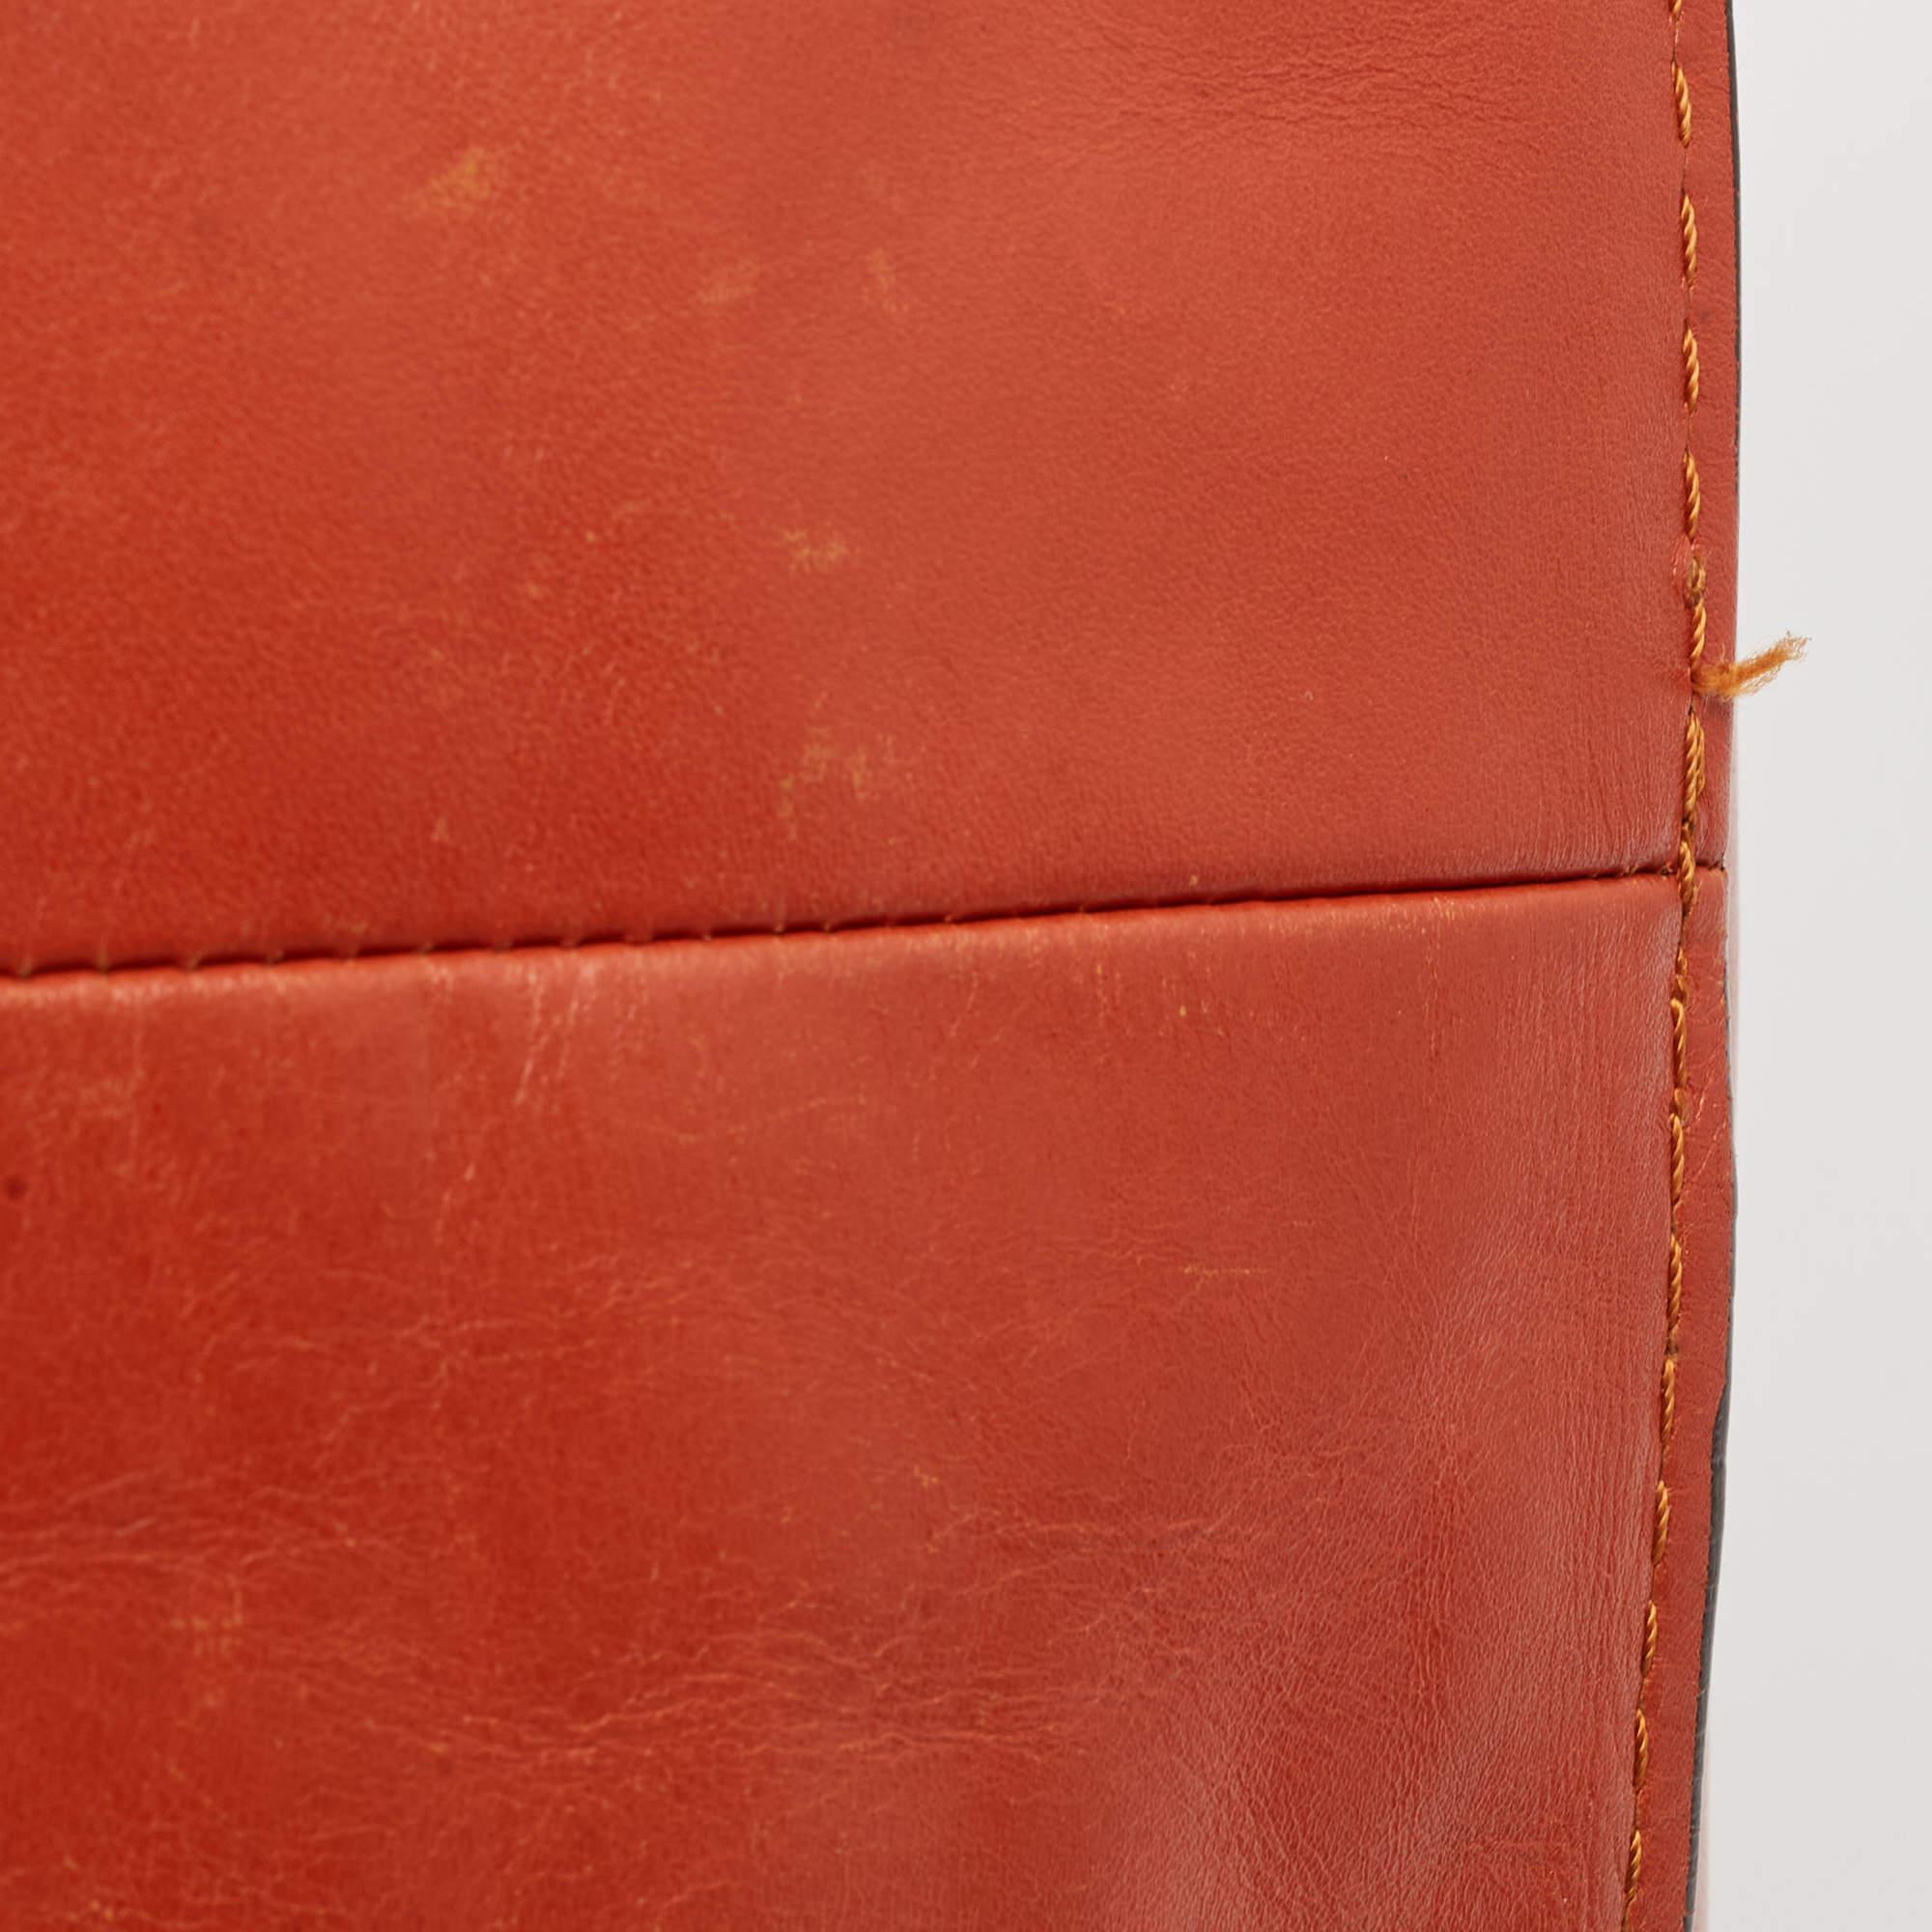 Chloe Tan/Beige Python And Leather Marcie Shoulder Bag For Sale 10